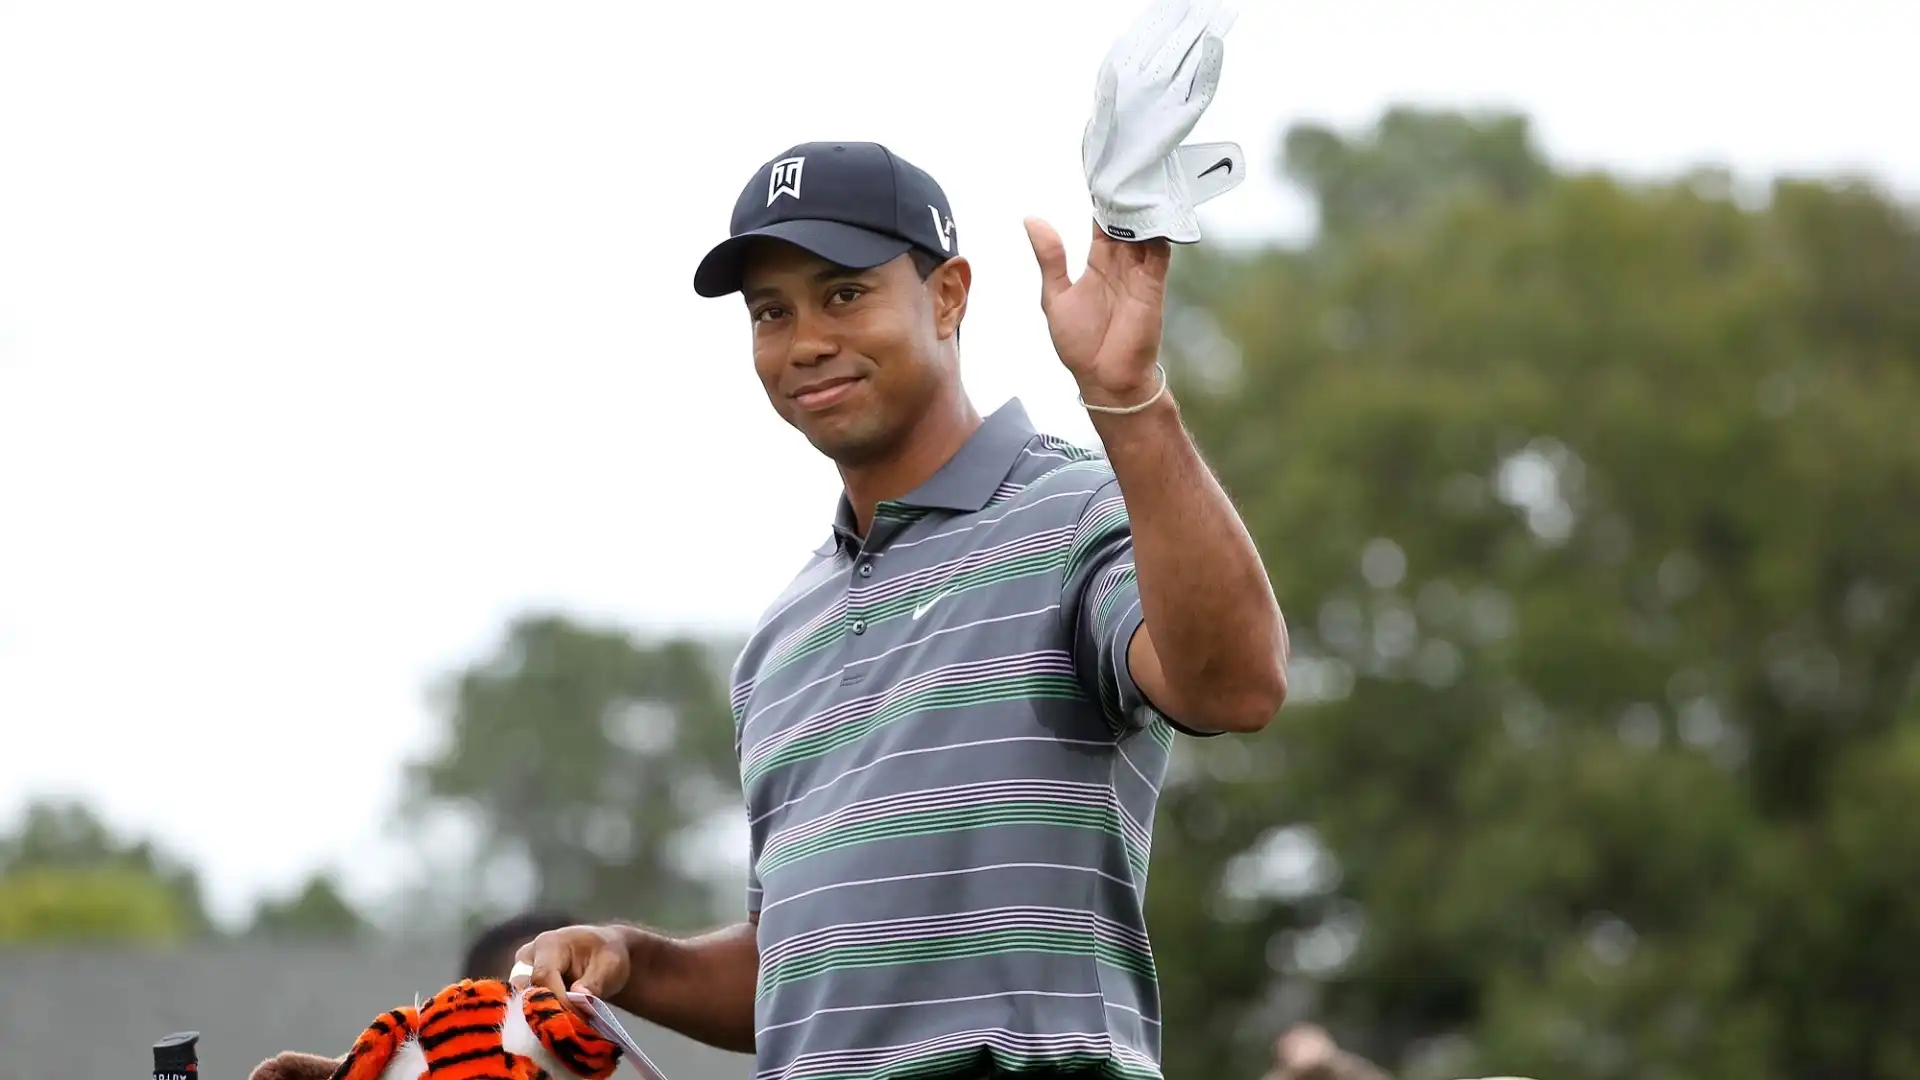 2010: Tiger Woods (Golf), guadagni totali stimati 105 milioni di dollari